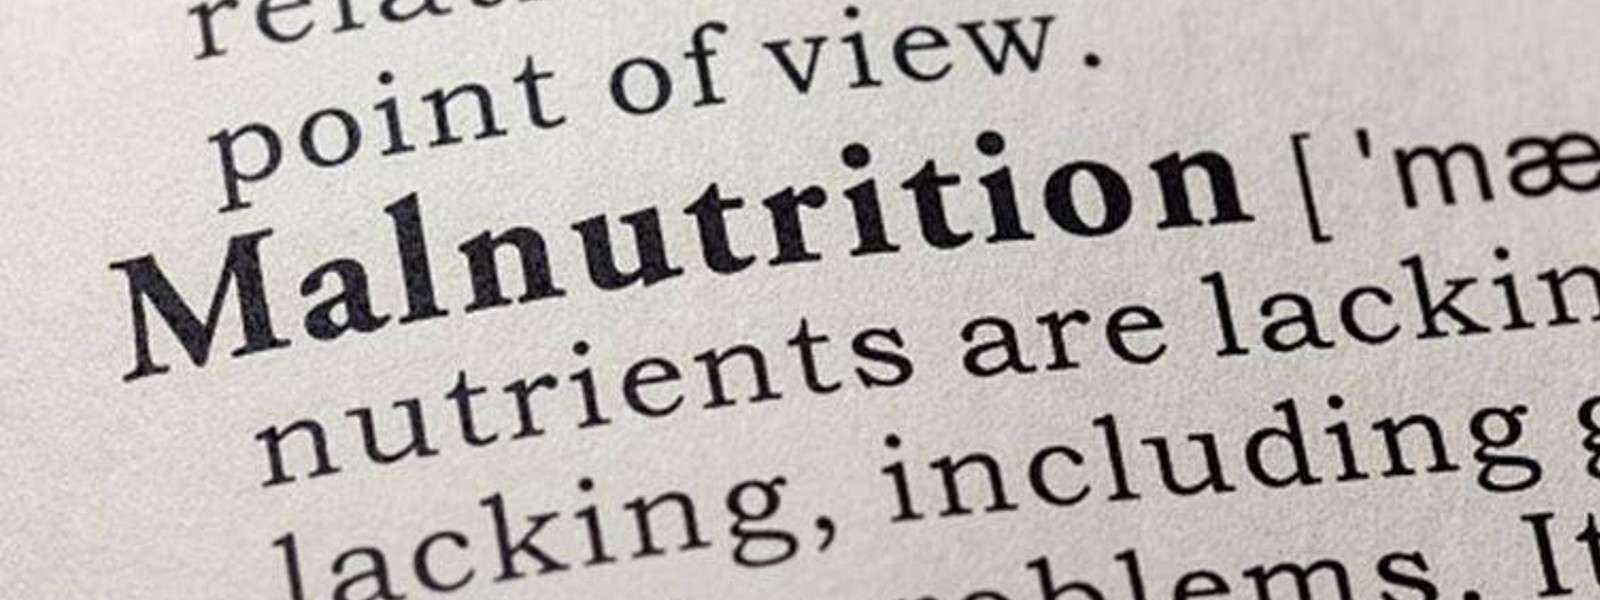 Malnutrition developing into a more complex issue: Dr. Jayaruwan Bandara